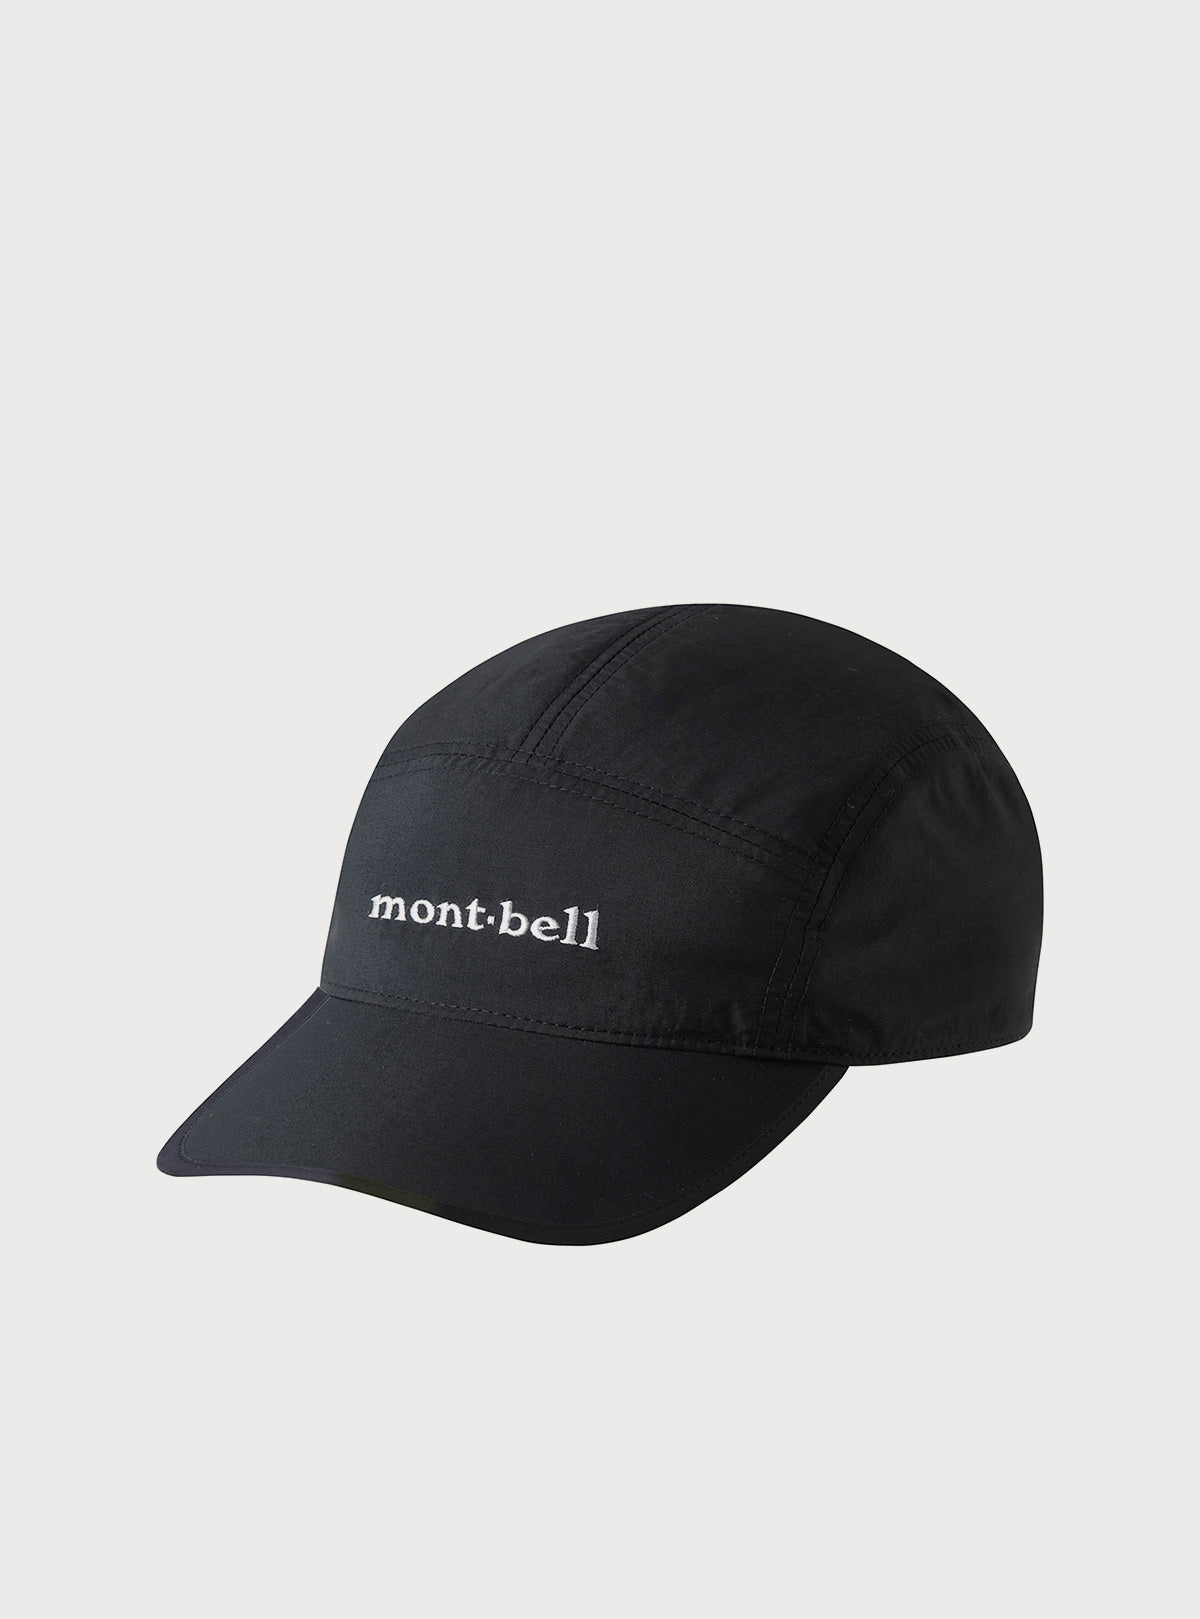 Montbell - OD Crushable Cap - BK